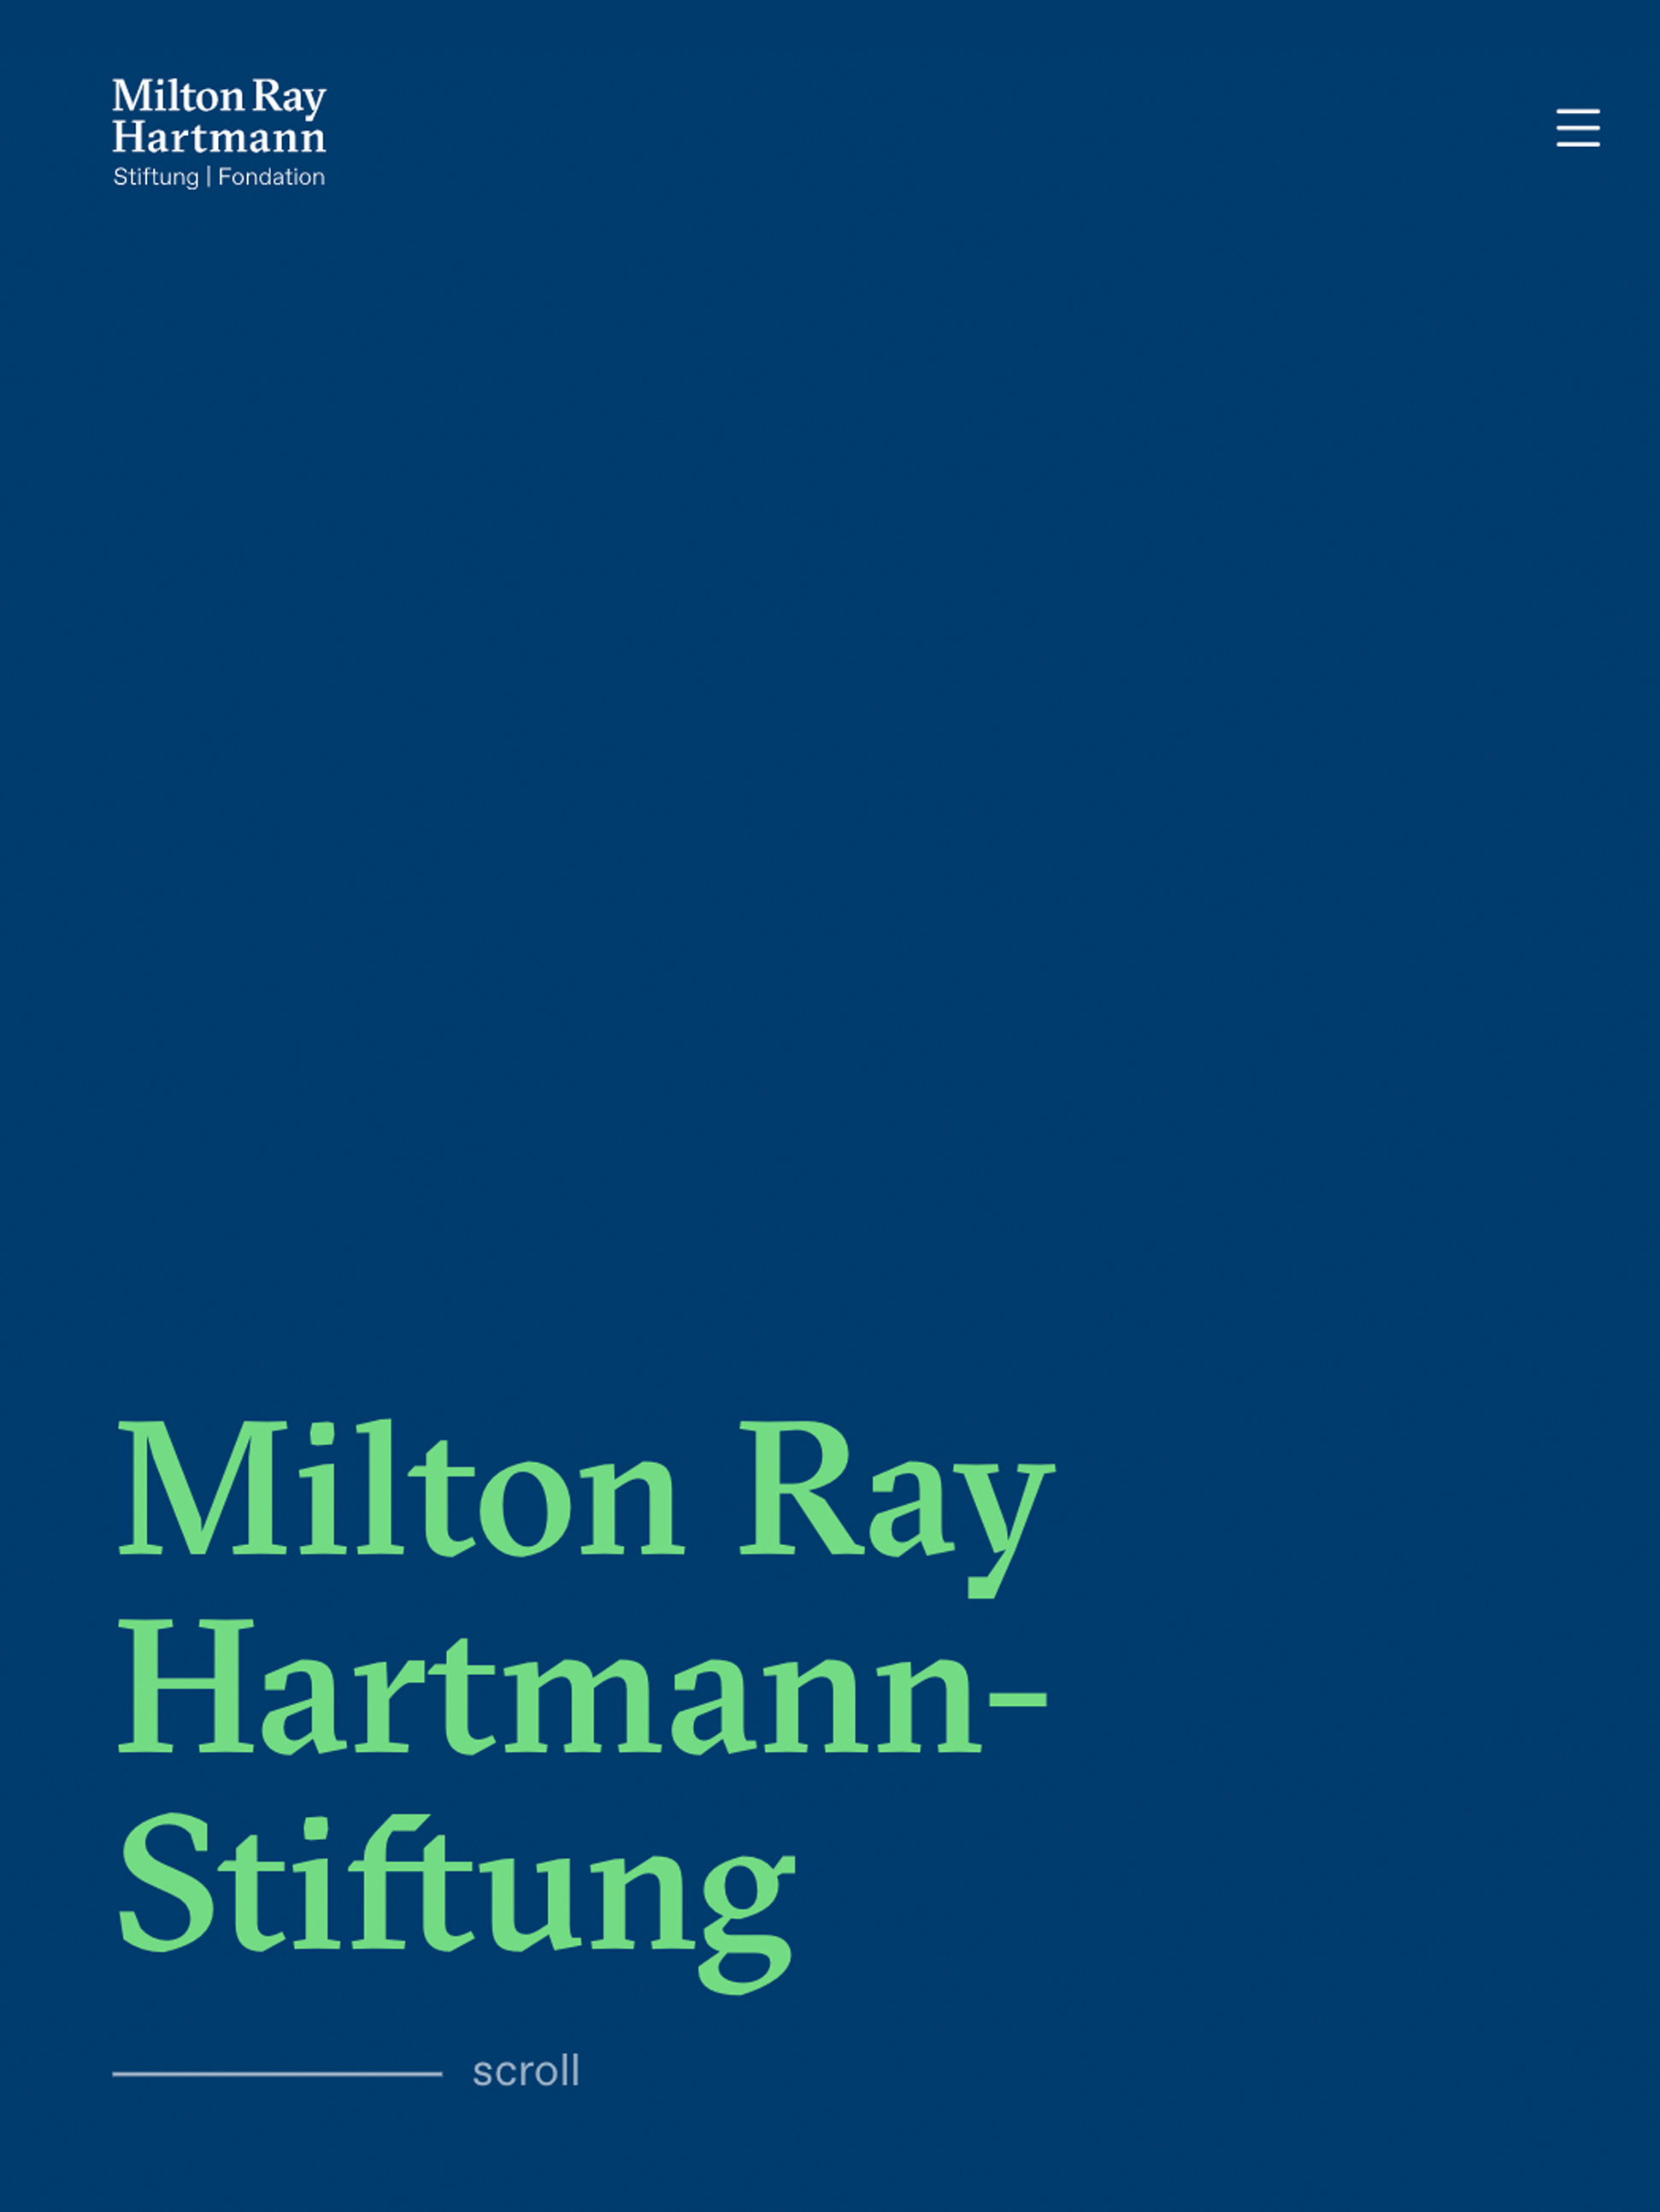 Milton Ray Hartmann-Stiftung